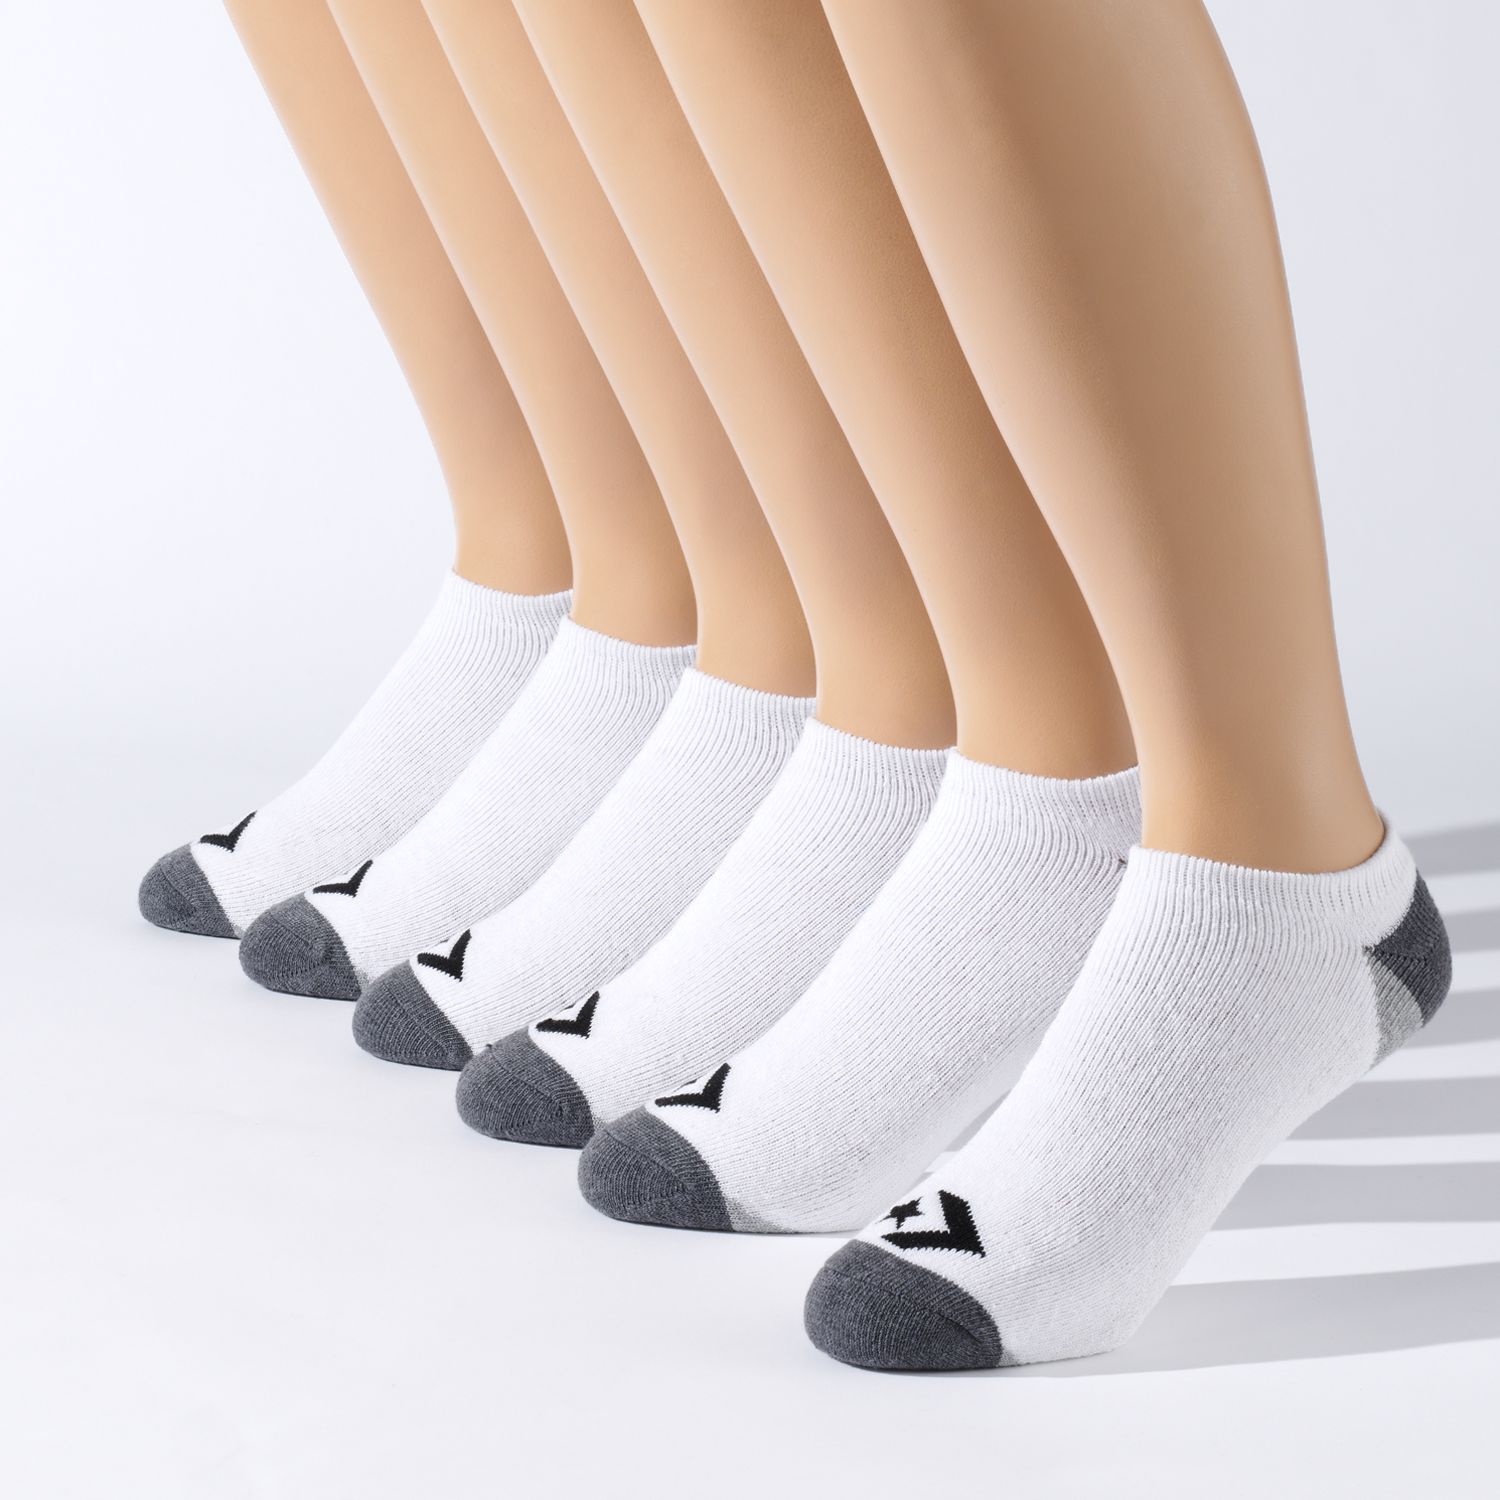 converse socks white